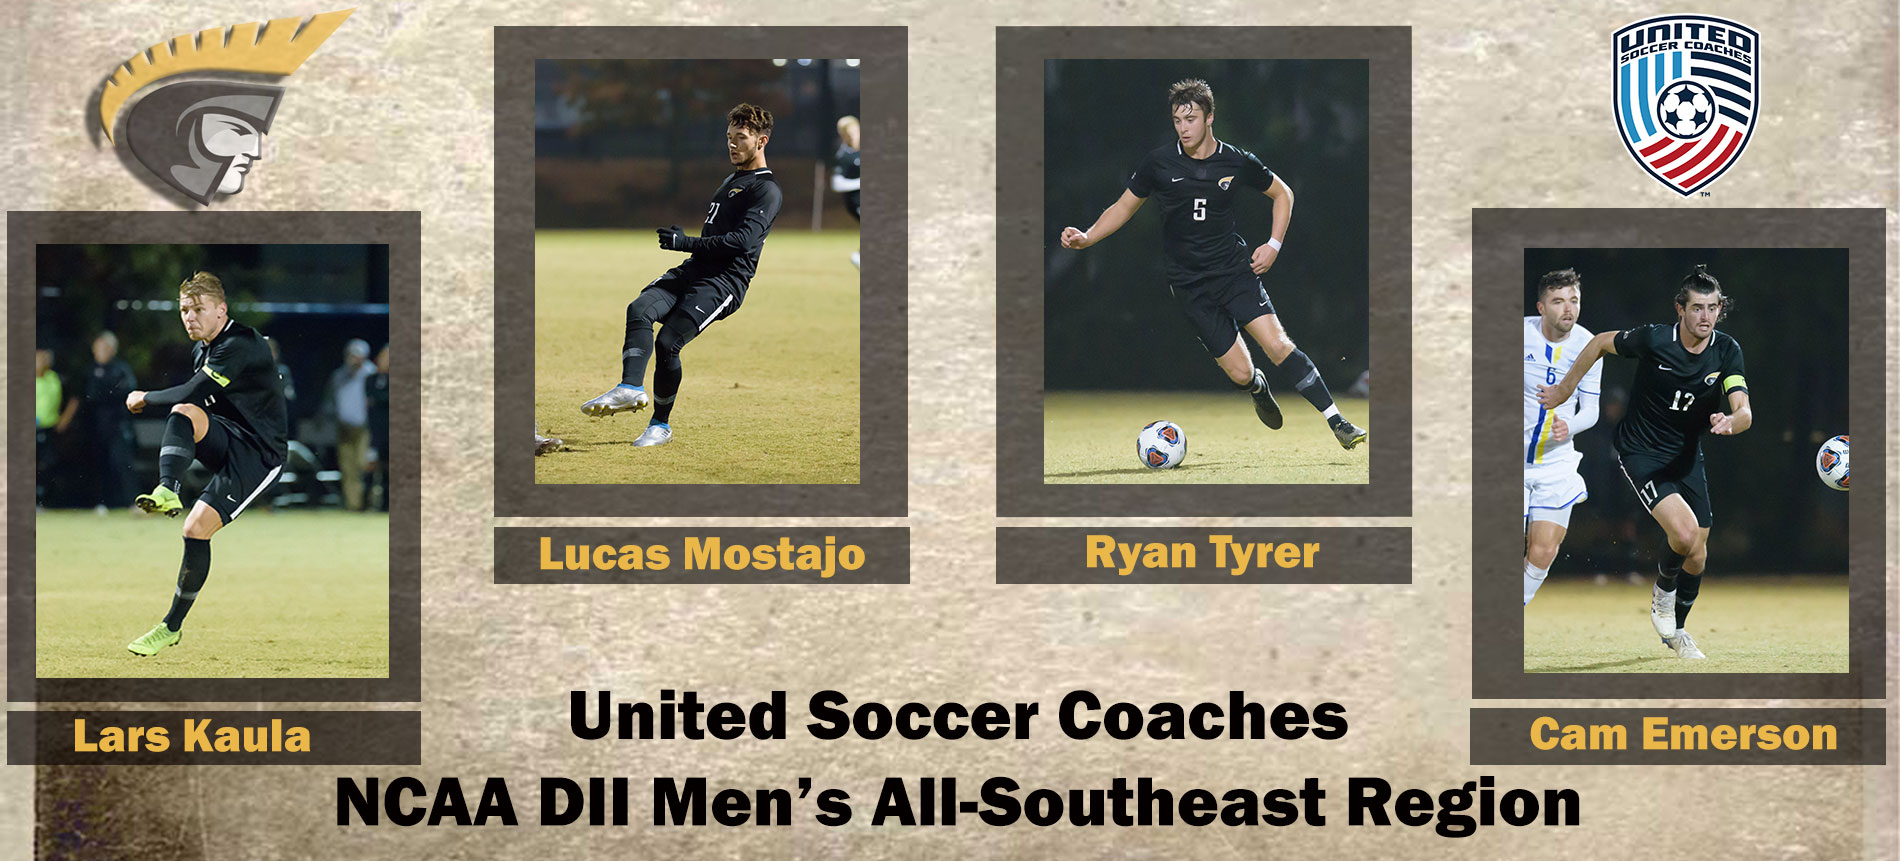 Four Trojans Earn United Soccer Coaches NCAA DII Men’s All-Southeast Region